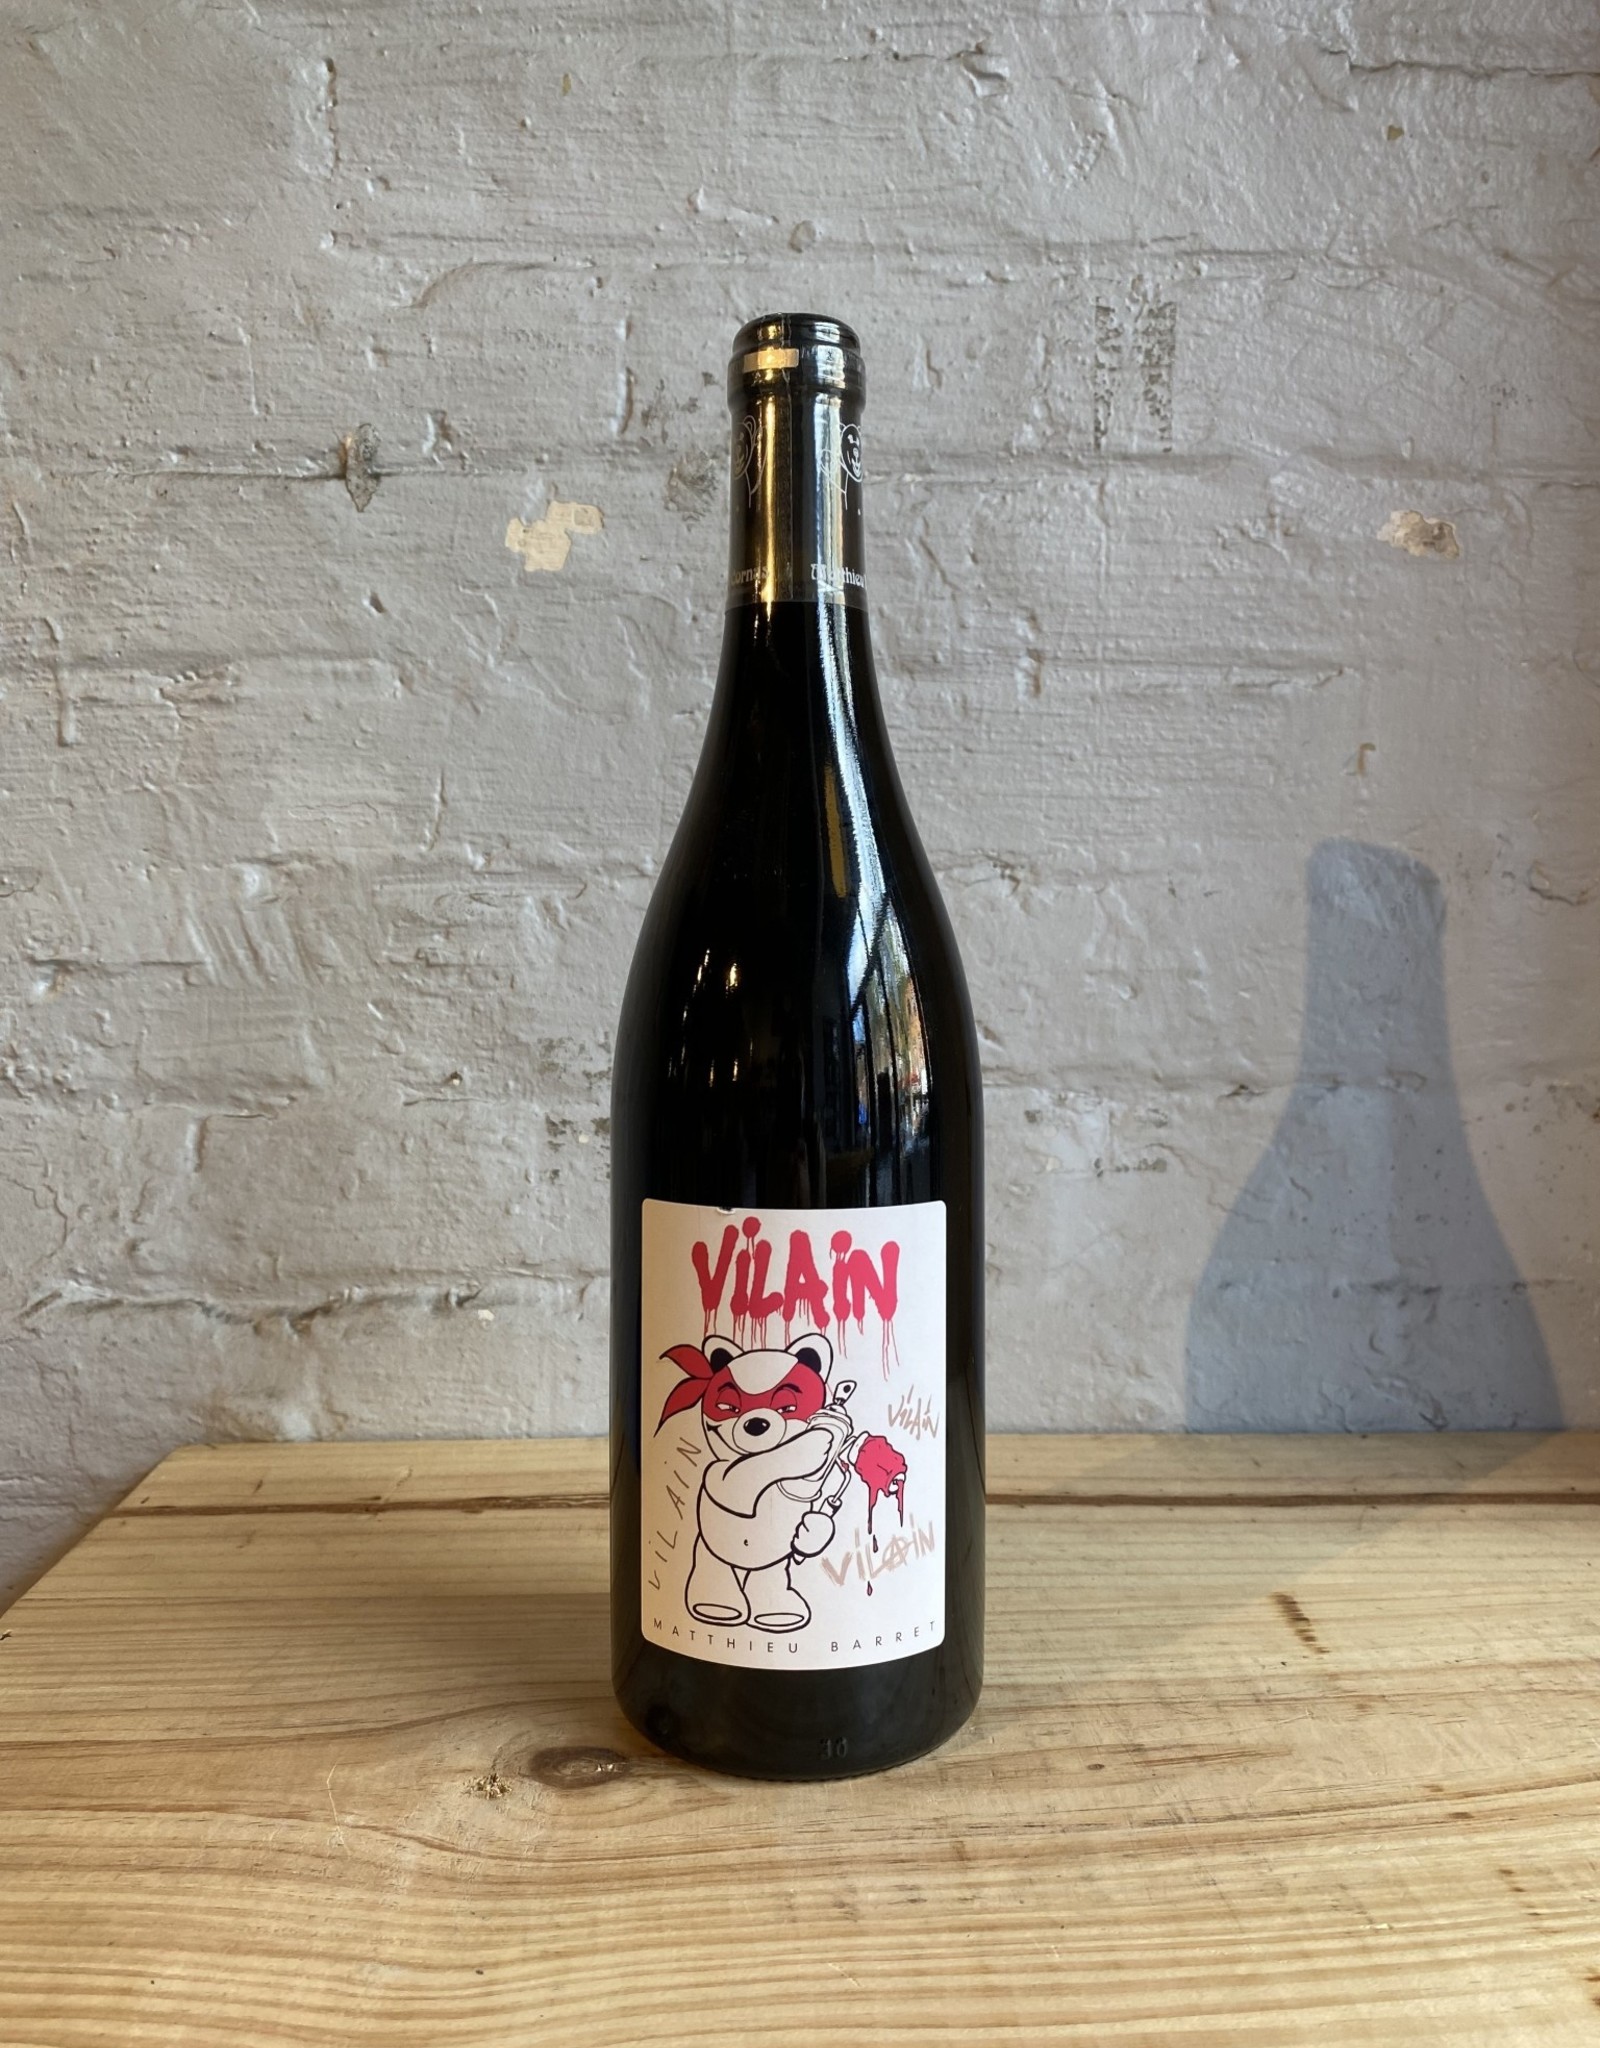 Wine 2019 Matthieu Barret Vilain Vin de France - Rhone Valley, France